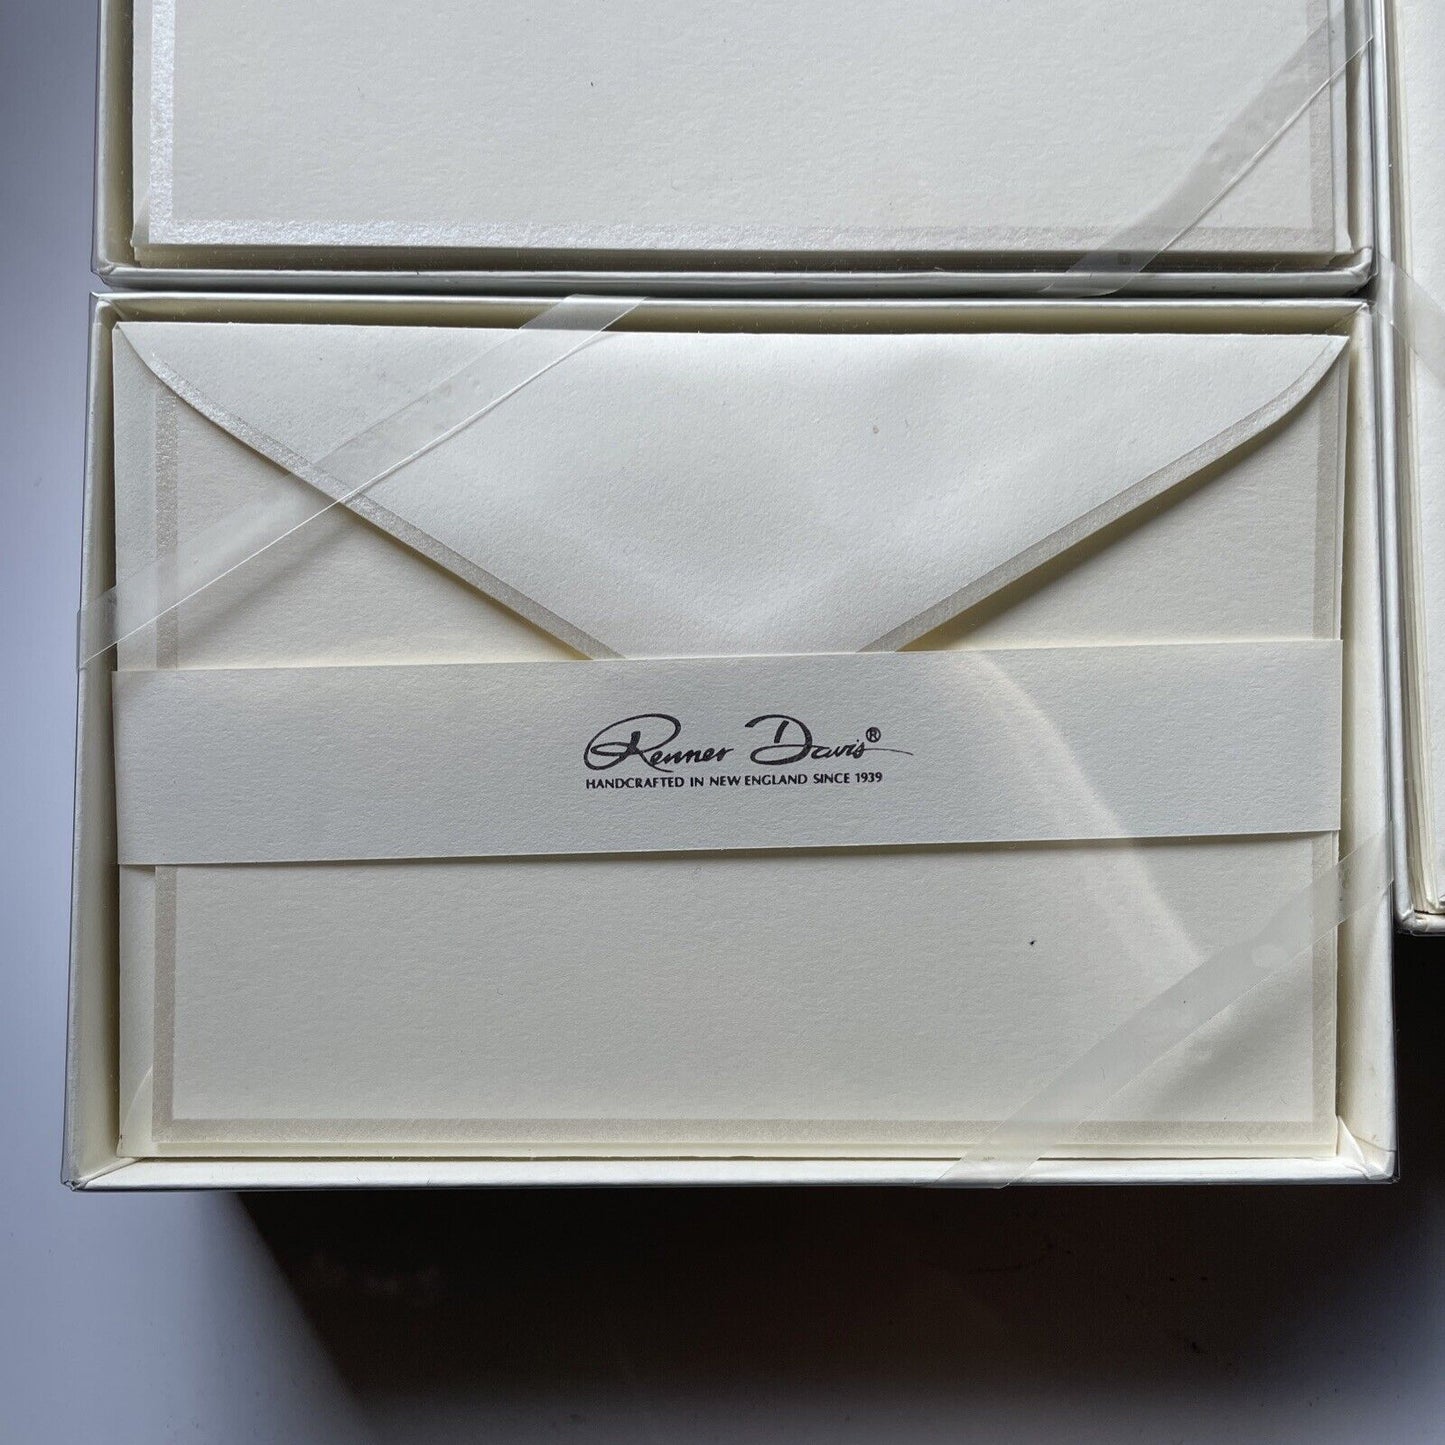 Lot Of 3 RENNER DAVIS Stationary 20 Handcrafted Cards & Envelopes 6-1/4x4-1/4”